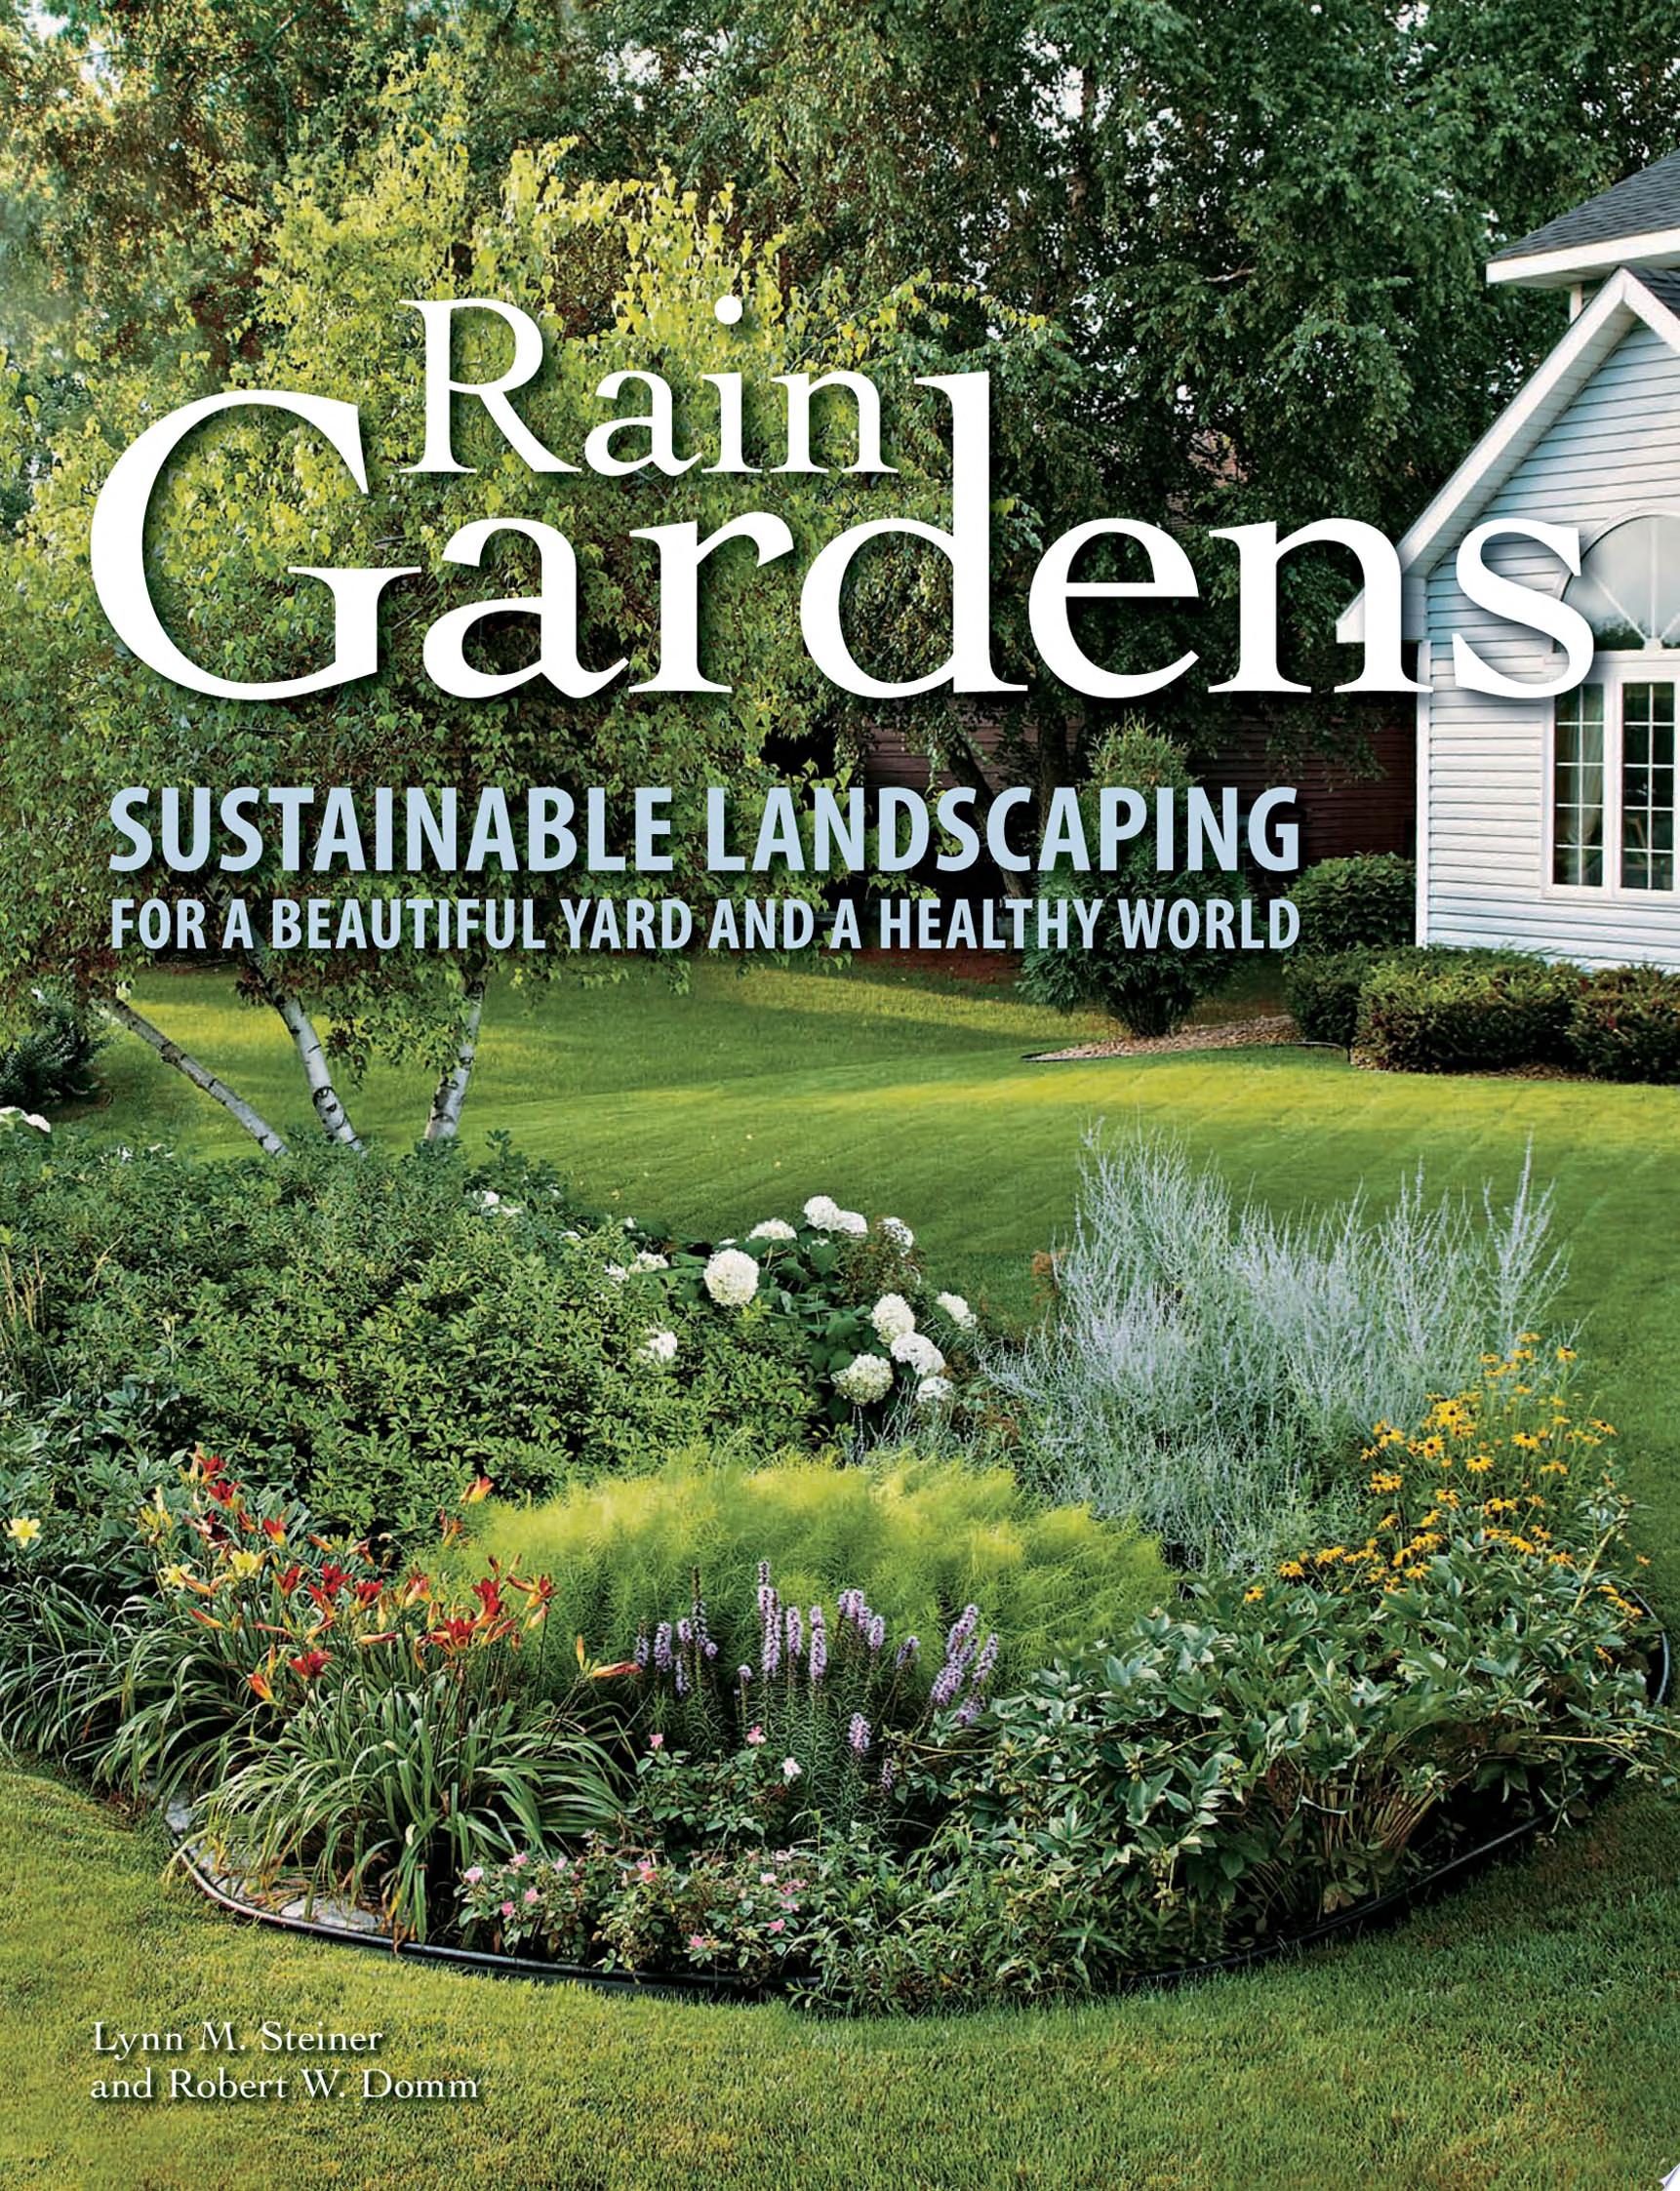 Image for "Rain Gardens"